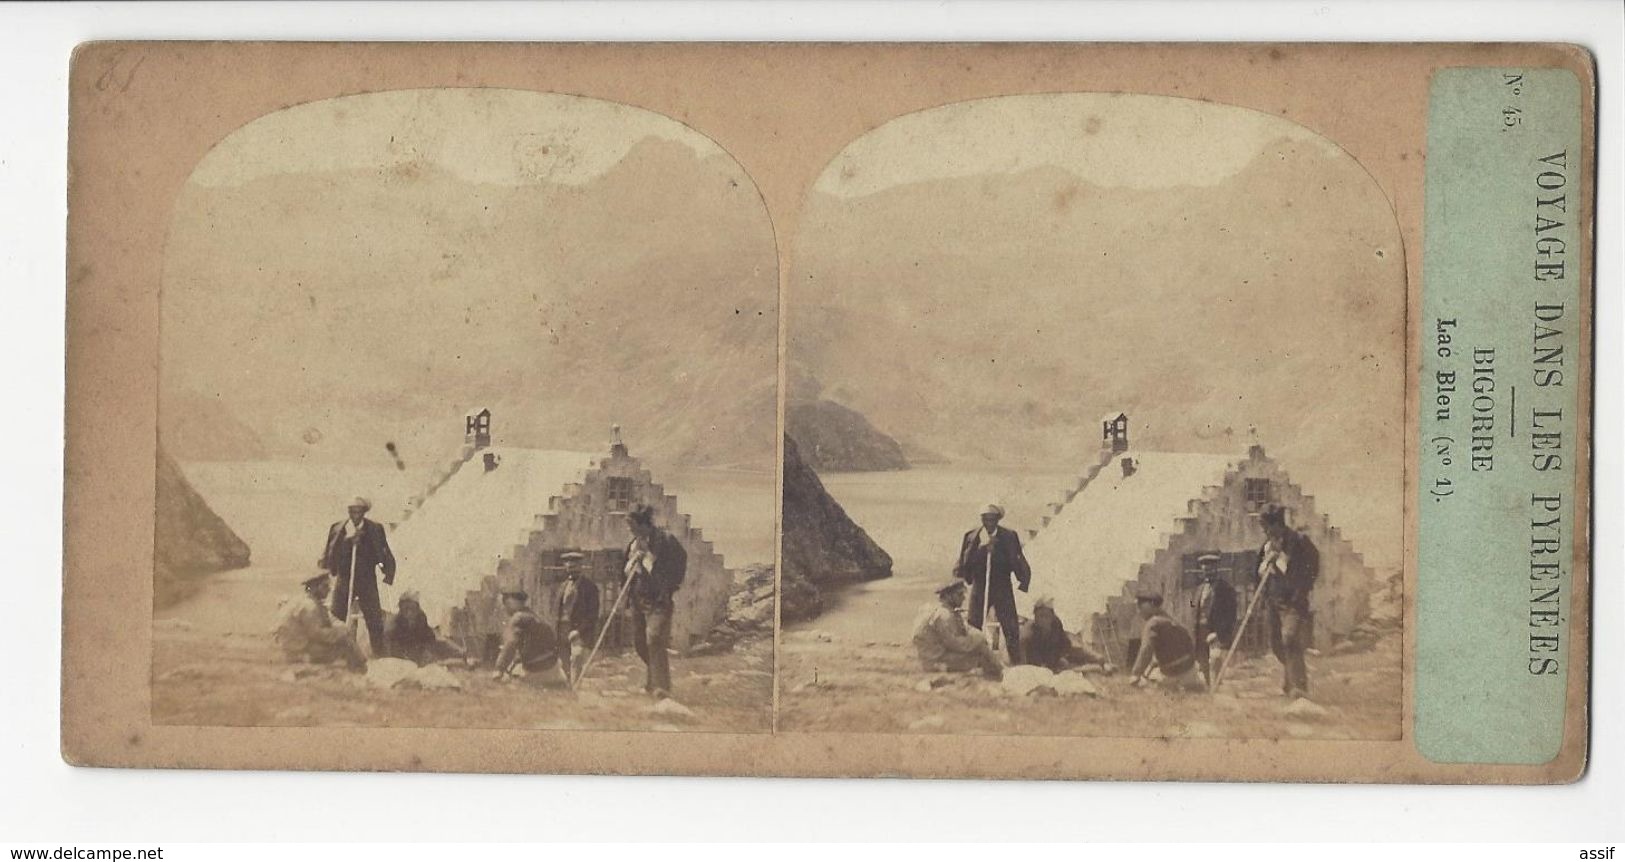 PYRENEES BIGORRE PHOTO STÉRÉO CIRCA 1860 FURNE ET TOURNIER  /FREE SHIPPING REGISTERED - Stereoscopio